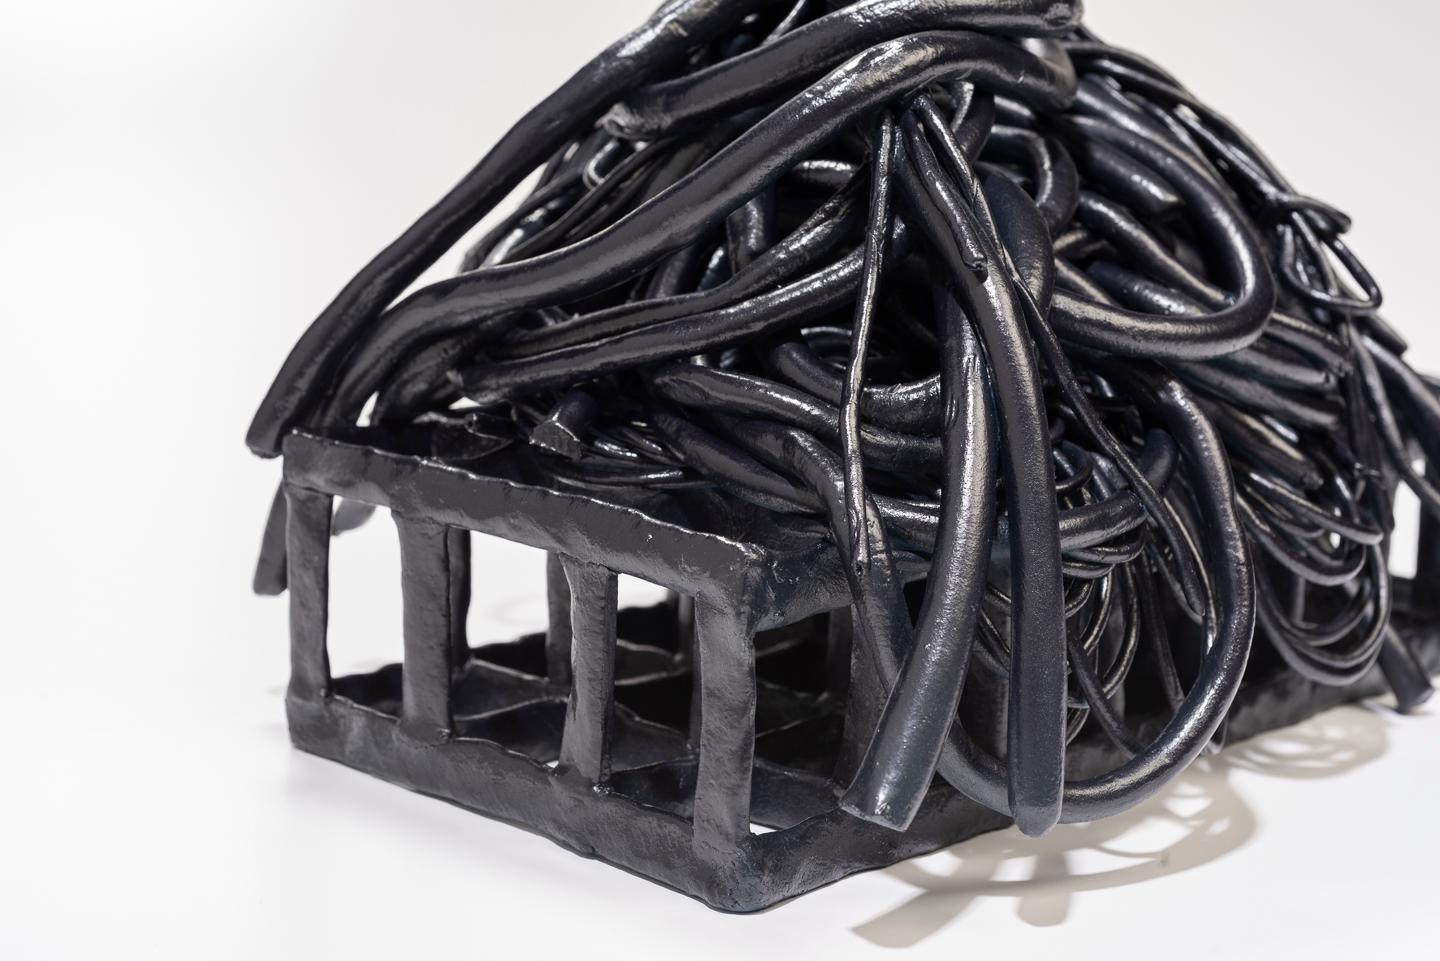 Glazed Joanna Poag Binding Time (Black Grid with Coils) Ceramic Sculpture, 2019 For Sale